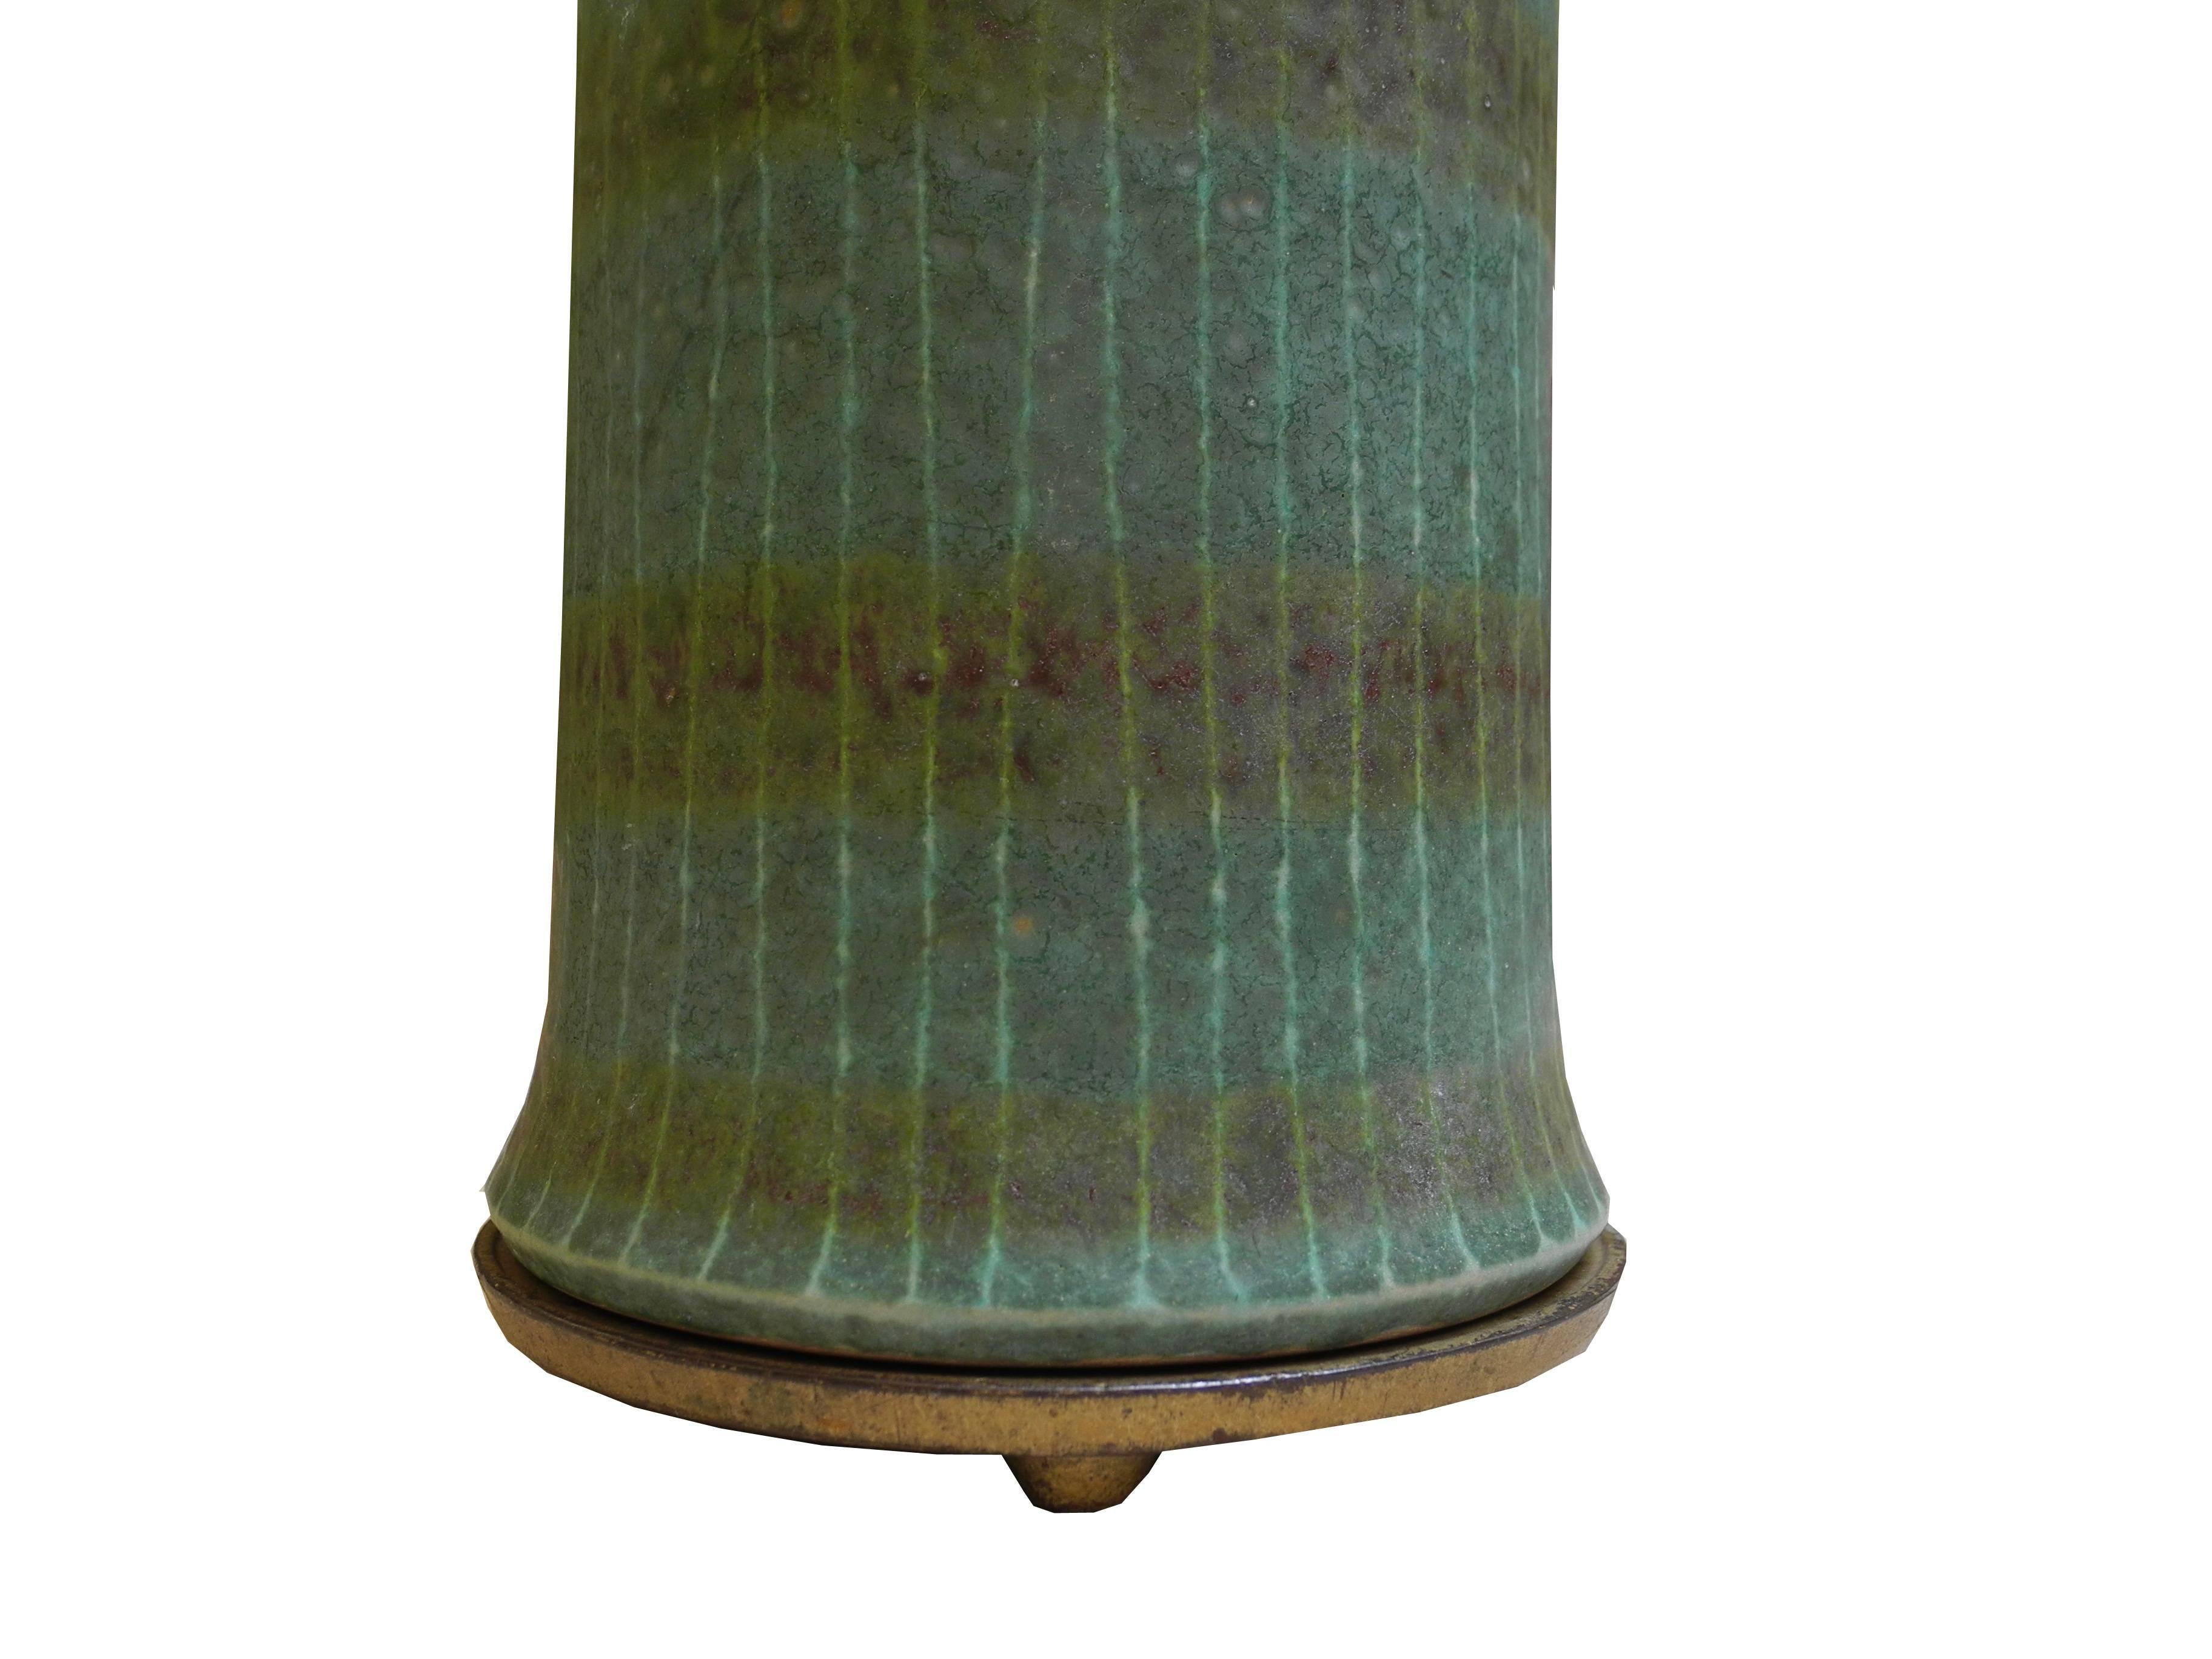 1950s Modern Asian Vessel Style Italian Ceramic Green Table Lamp For Sale 1